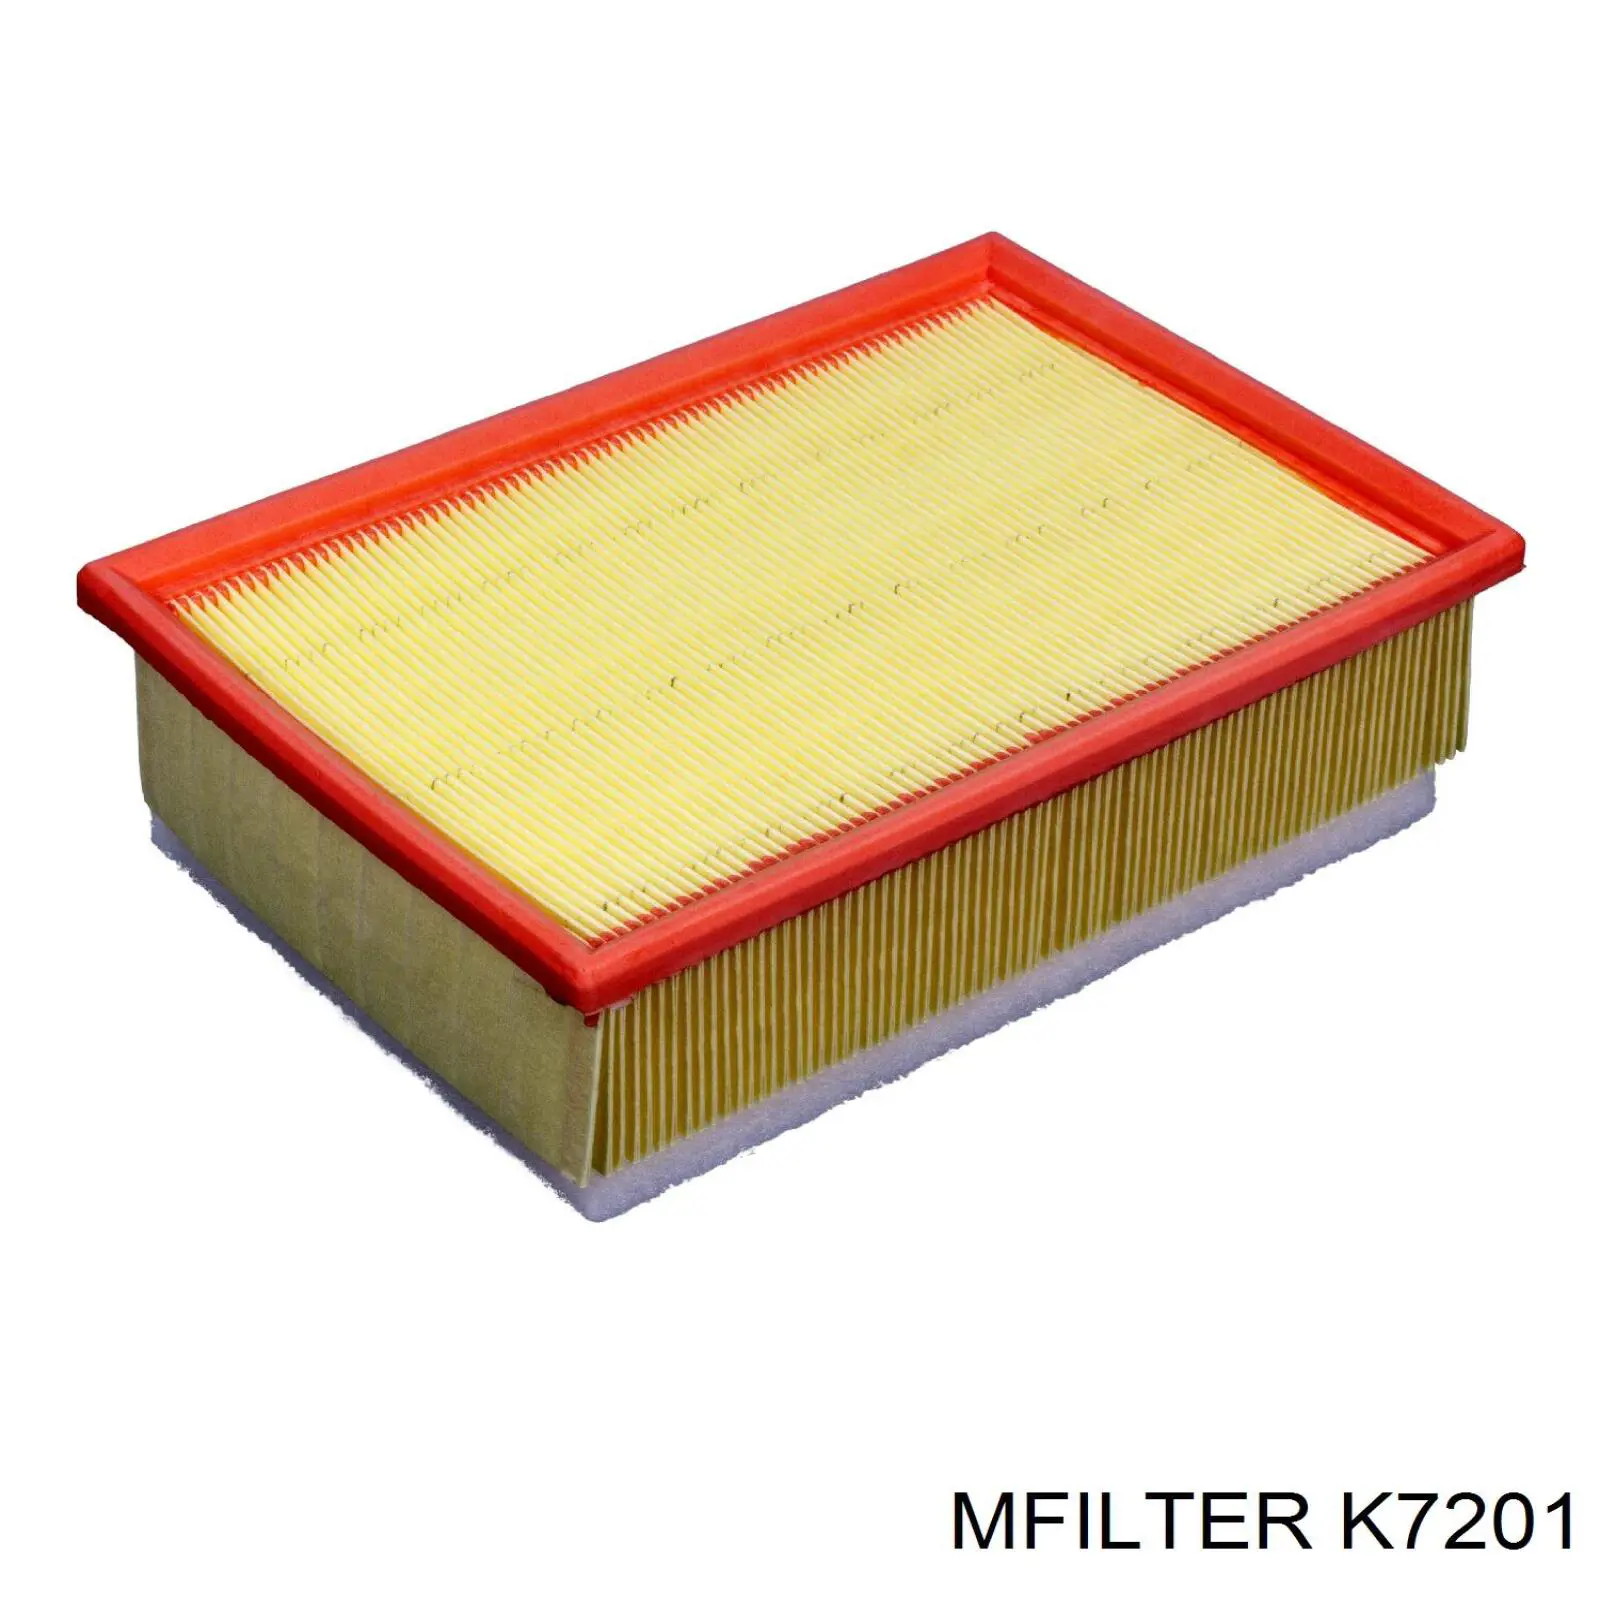 K7201 Mfilter filtro de aire